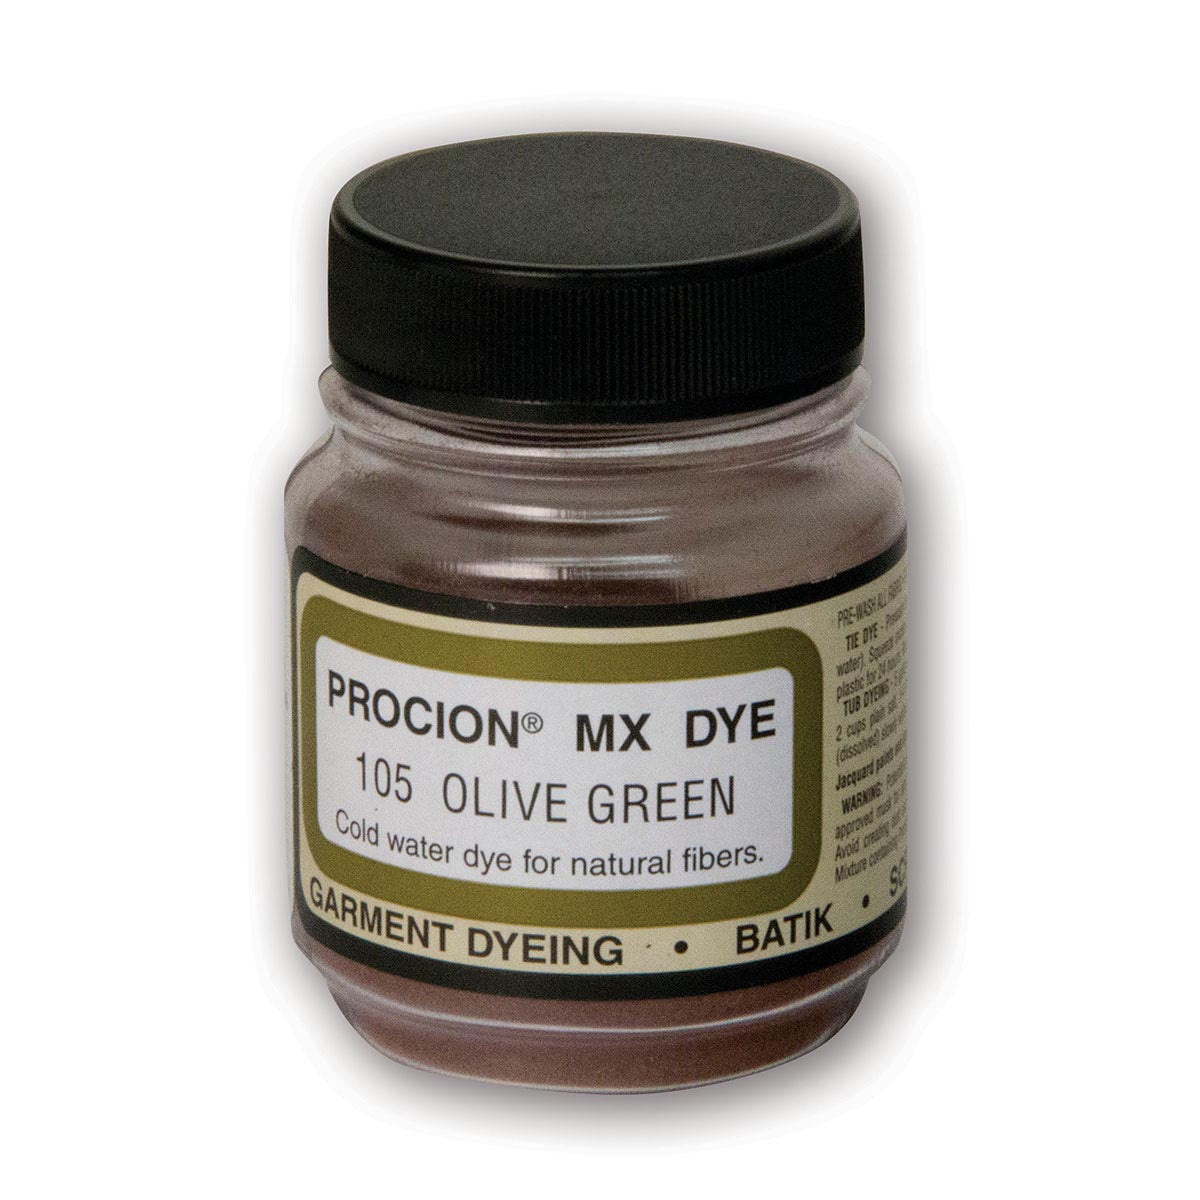 Jacquard - Procion MX Dye - Fabric Textile - Olive Green 105